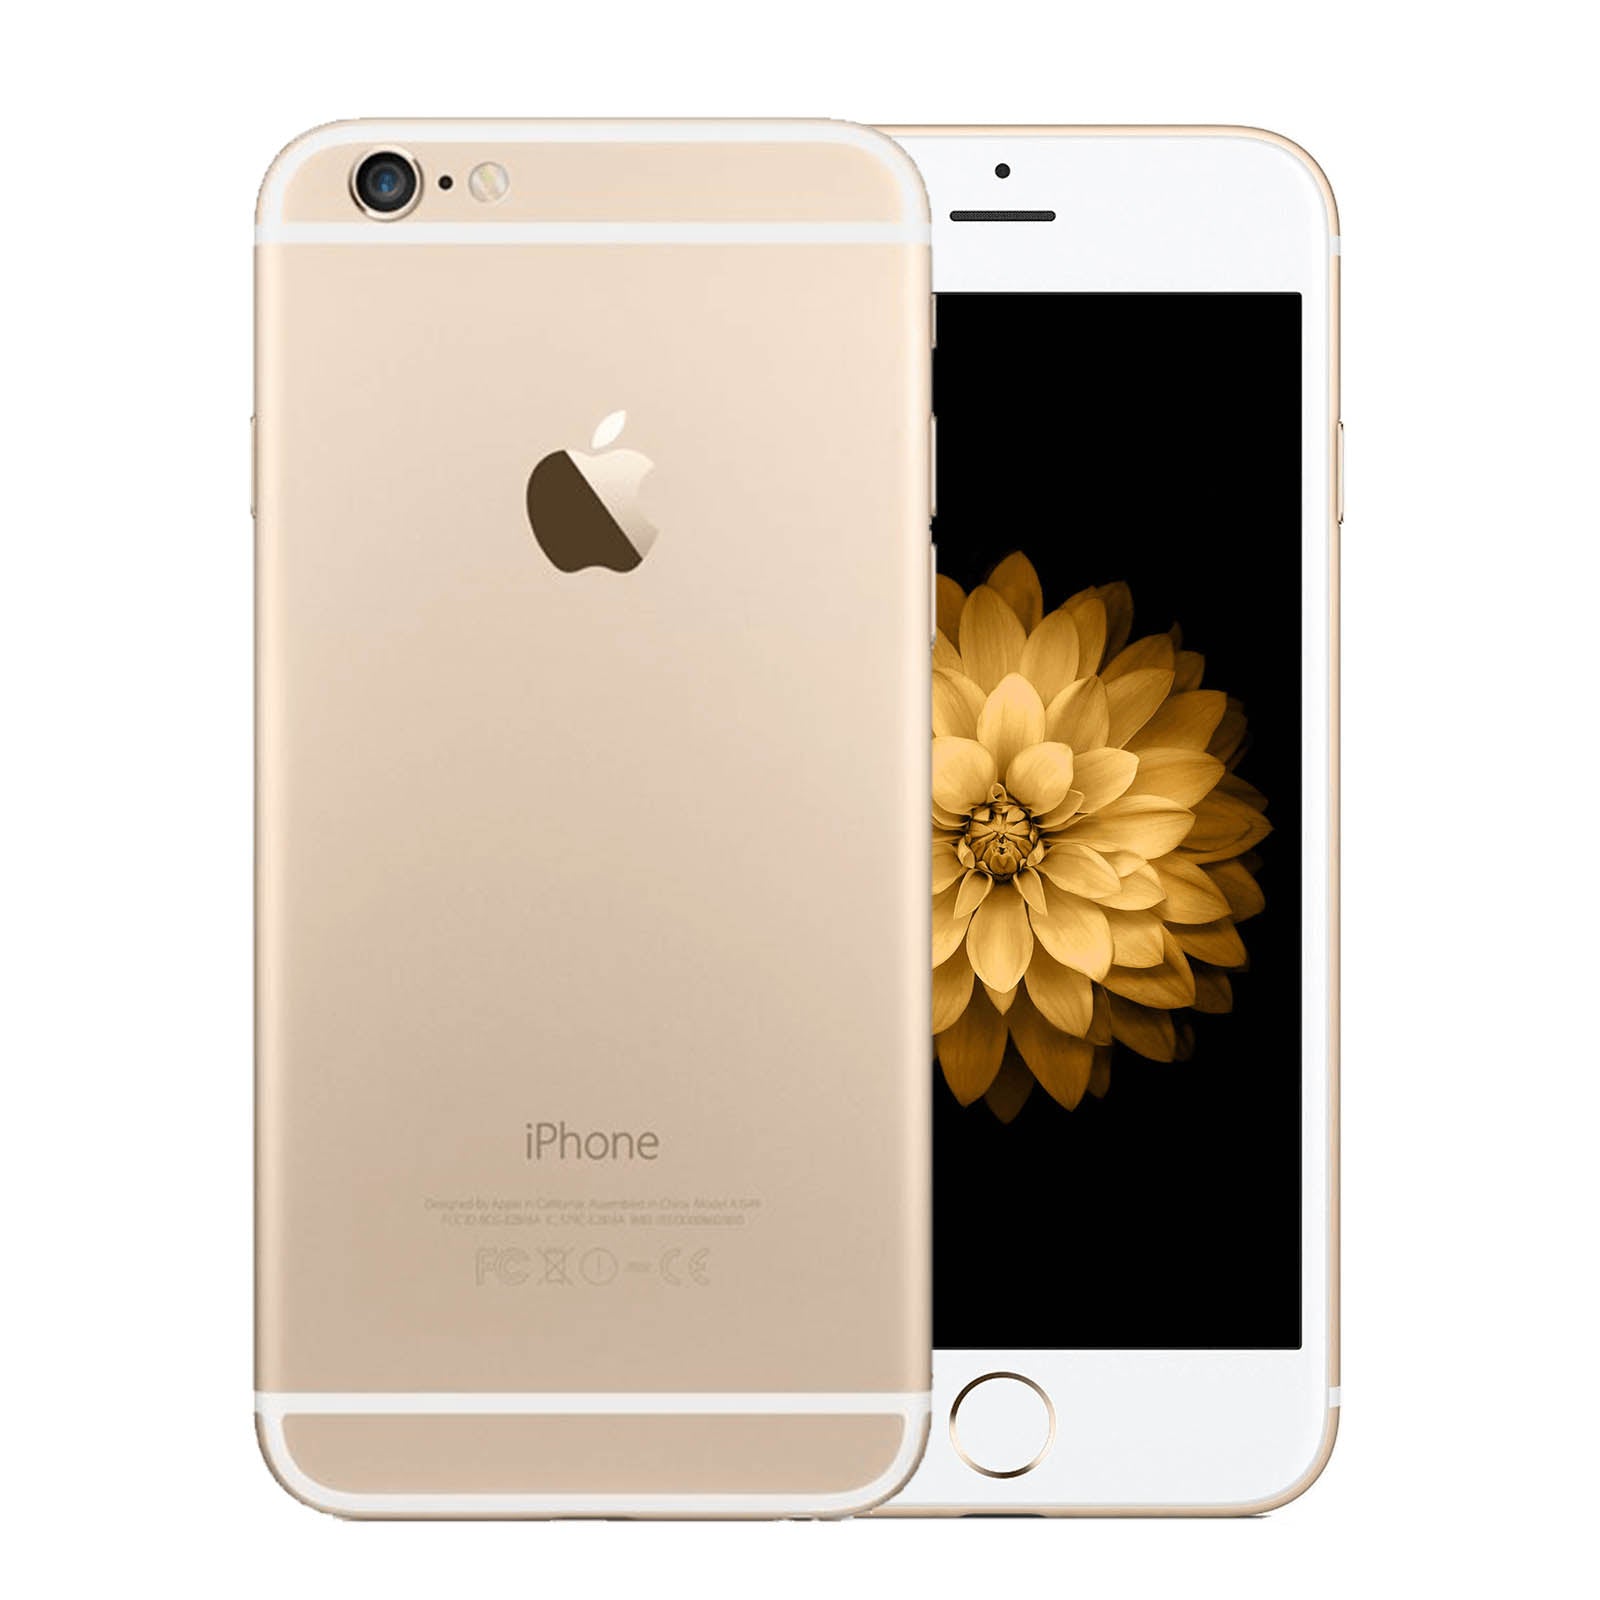 Apple iPhone 6 32GB Gold Fair - Unlocked